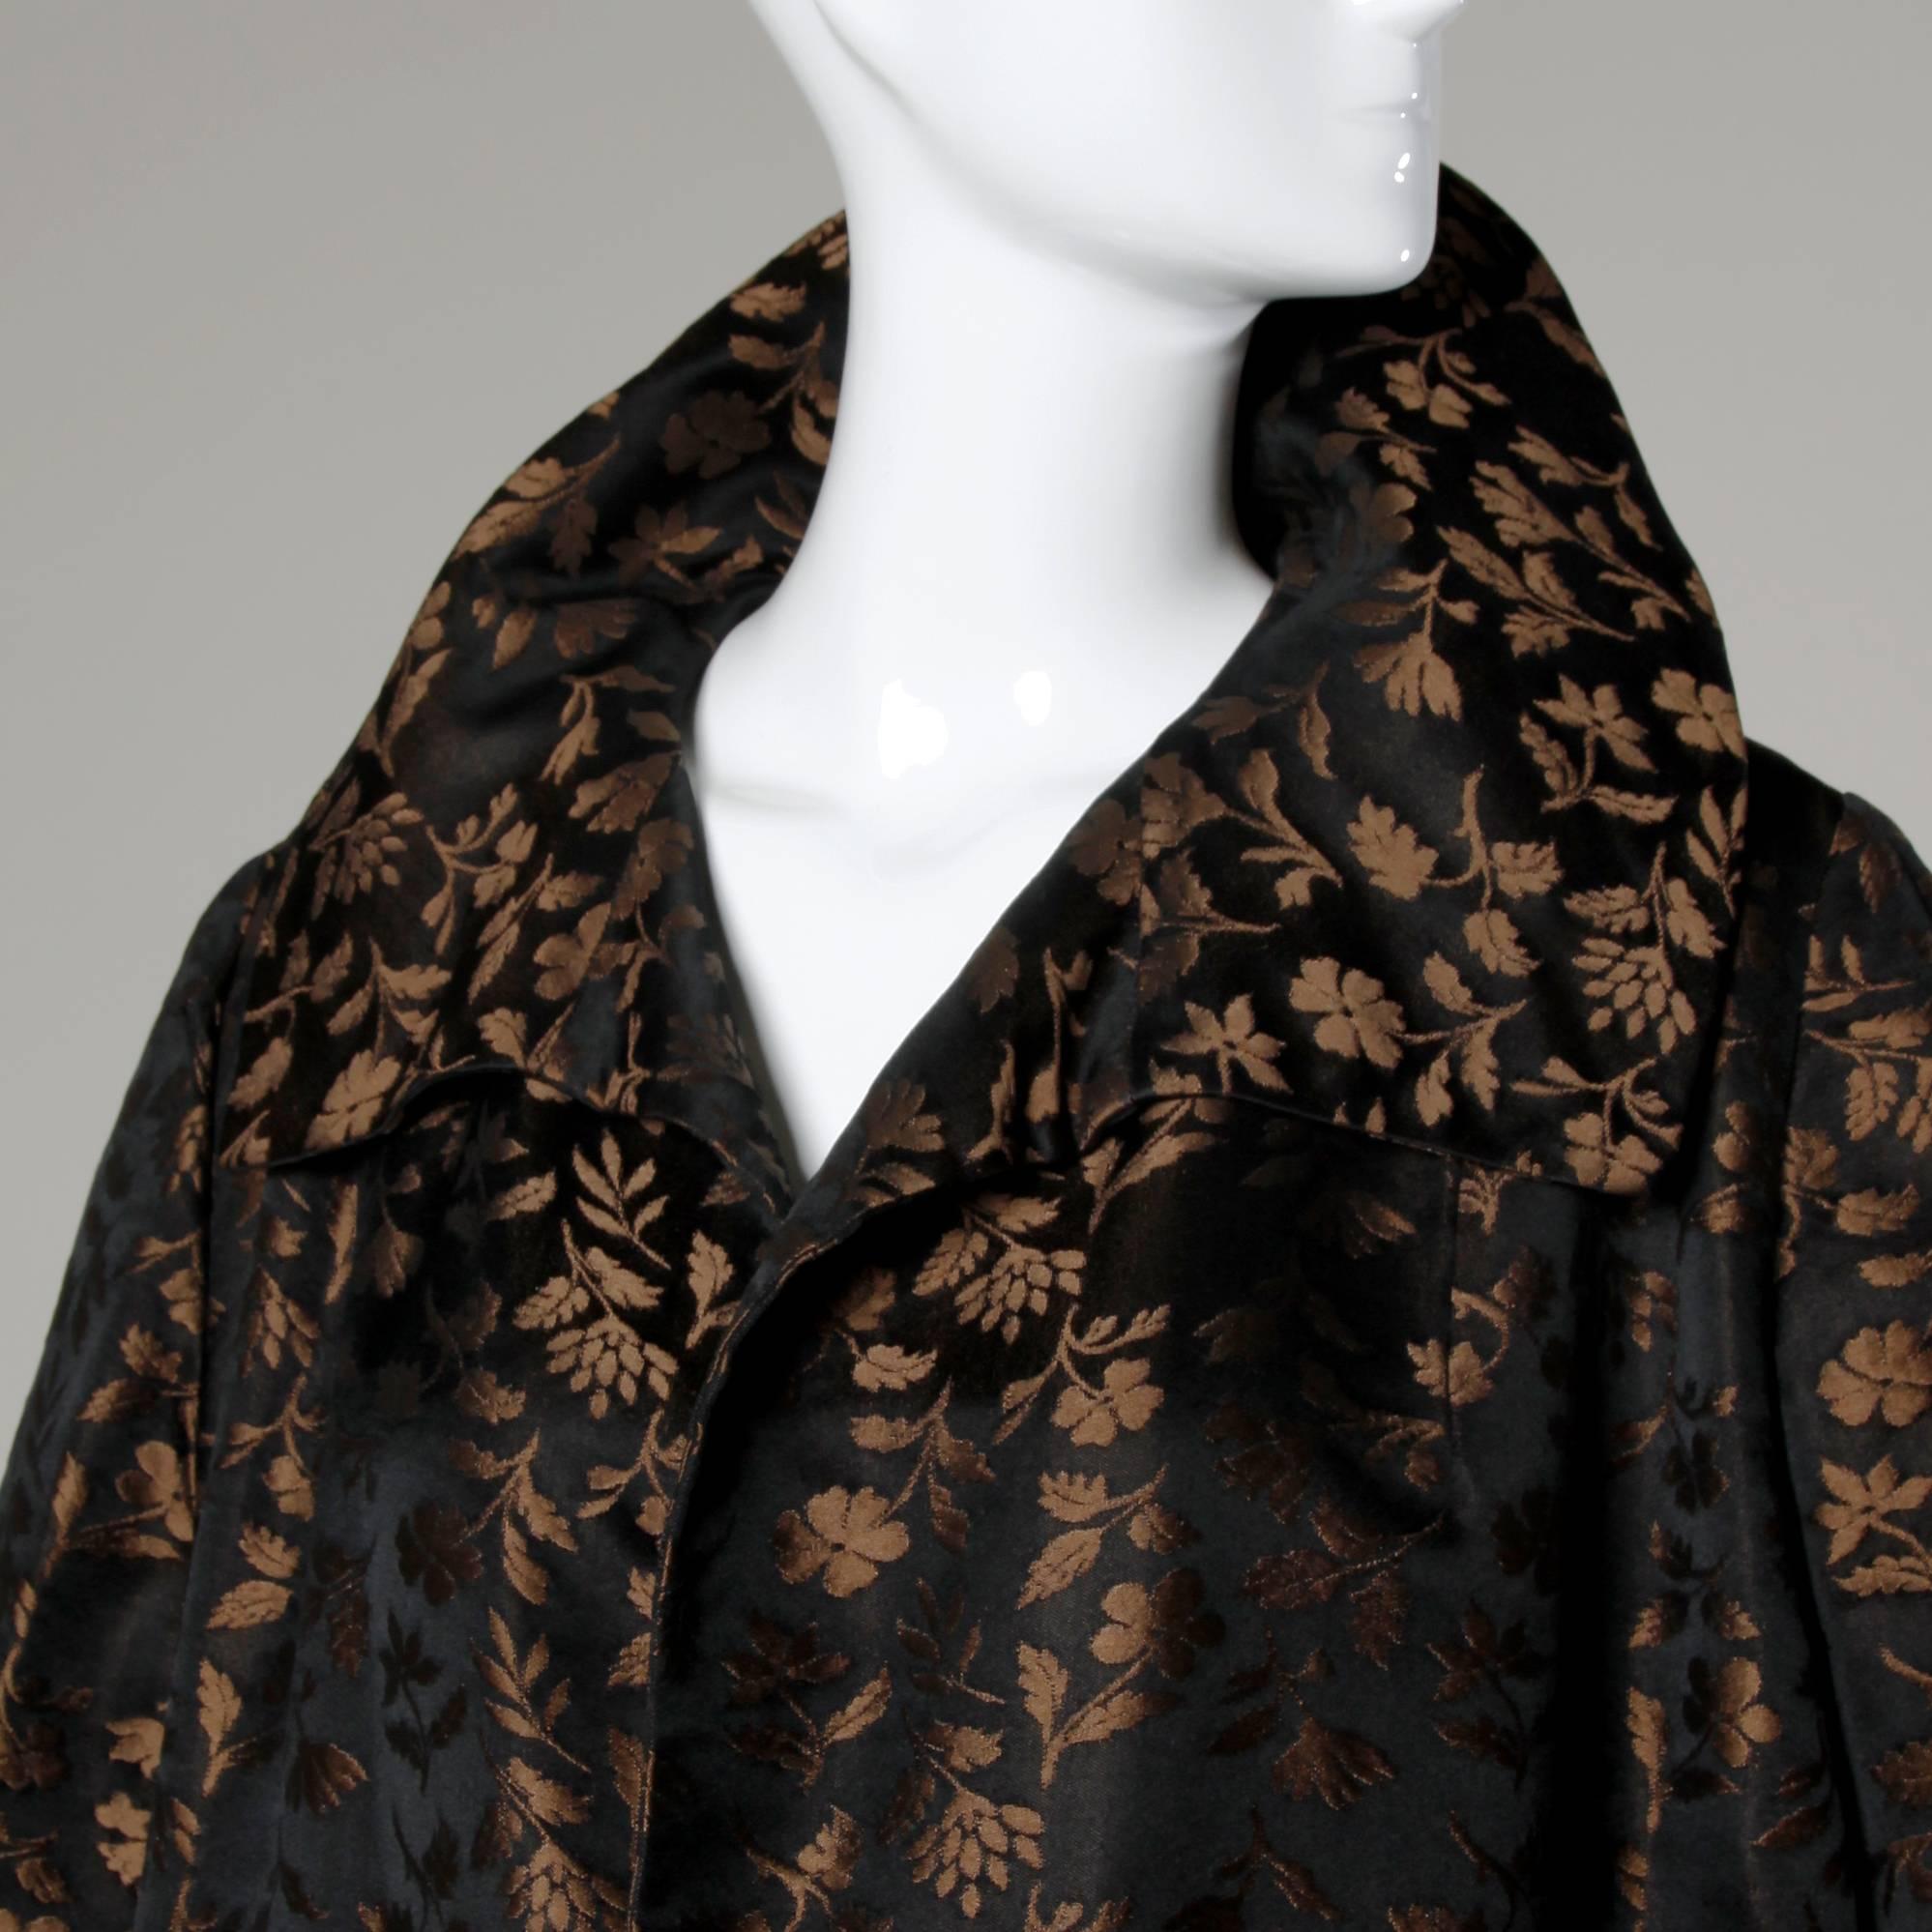 Women's Monte Sano & Pruzan Vintage 1950s Silk Brocade Coat with a Bubble Hem